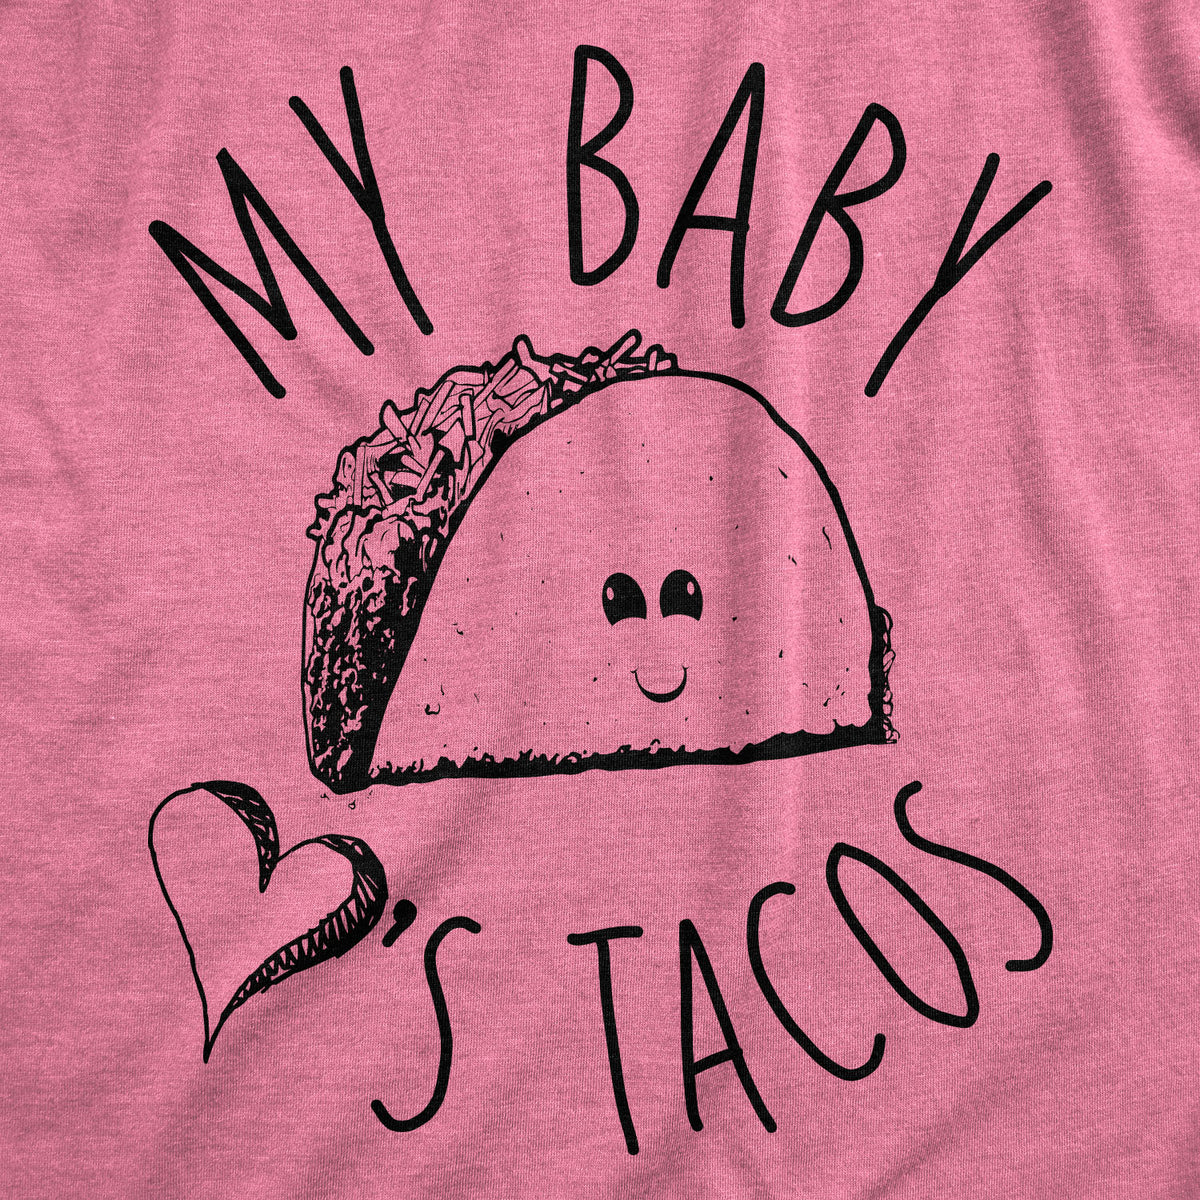 My Baby Loves Tacos Maternity T Shirt